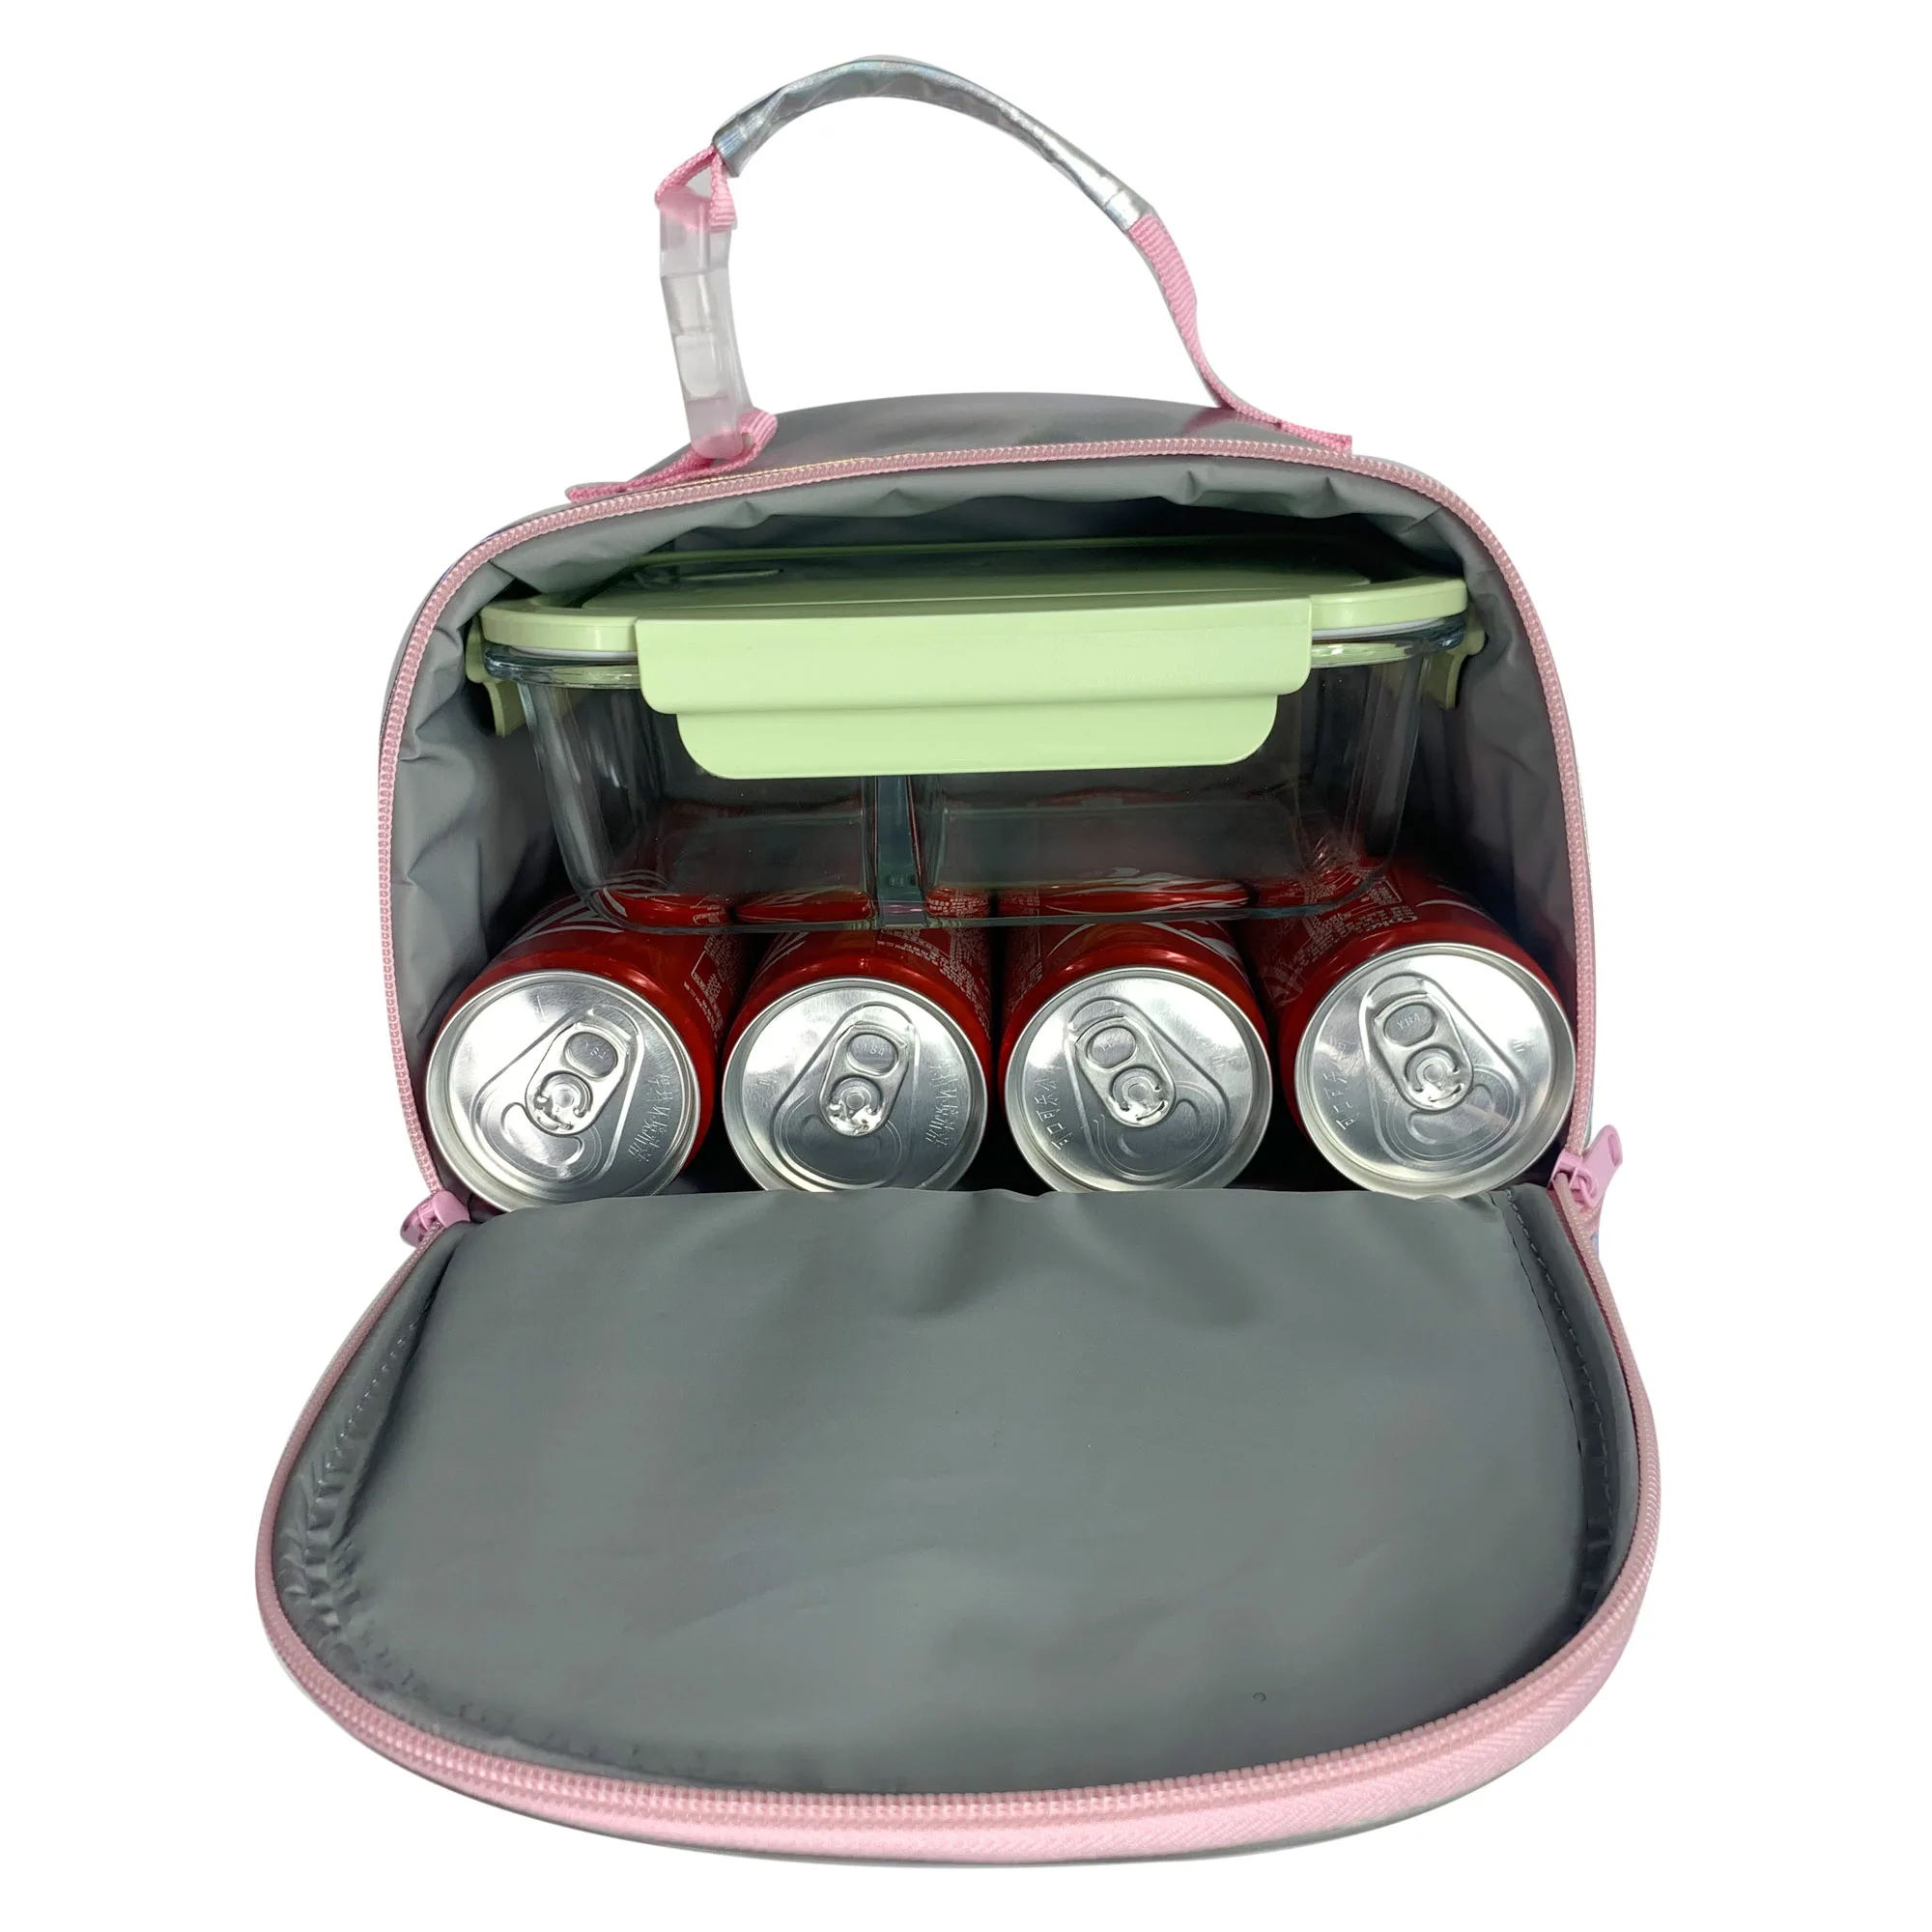 https://ae01.alicdn.com/kf/Sf315c01c61284170a2ed4d4deedfa1806/Magic-Unicorn-Flip-Sequin-Lunch-Box-Butterfly-Mermaid-Rainbow-Casual-Insulated-School-Tote-Cooler-Bag-For.jpg